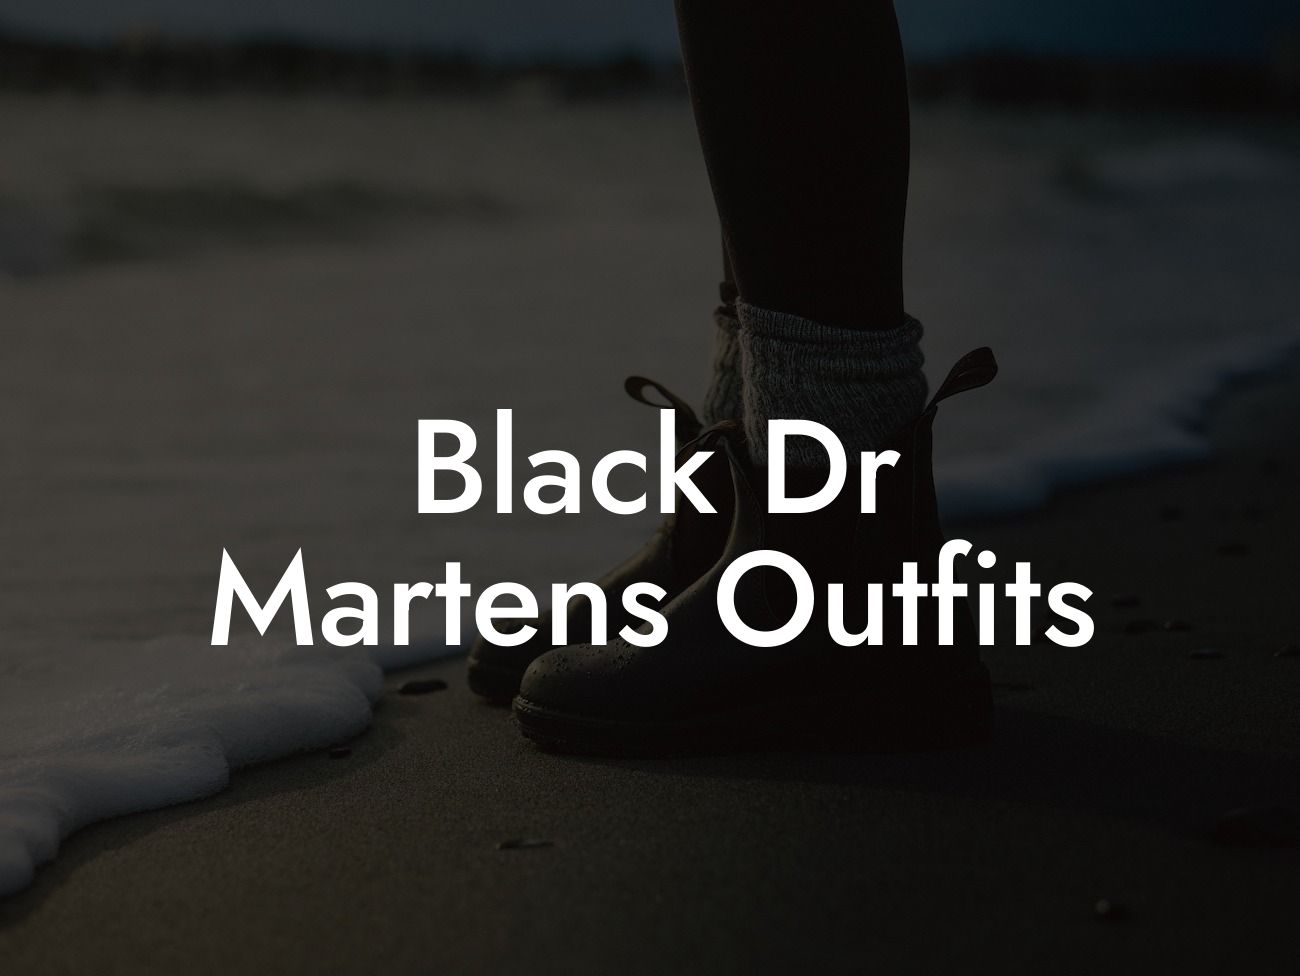 Black Dr Martens Outfits